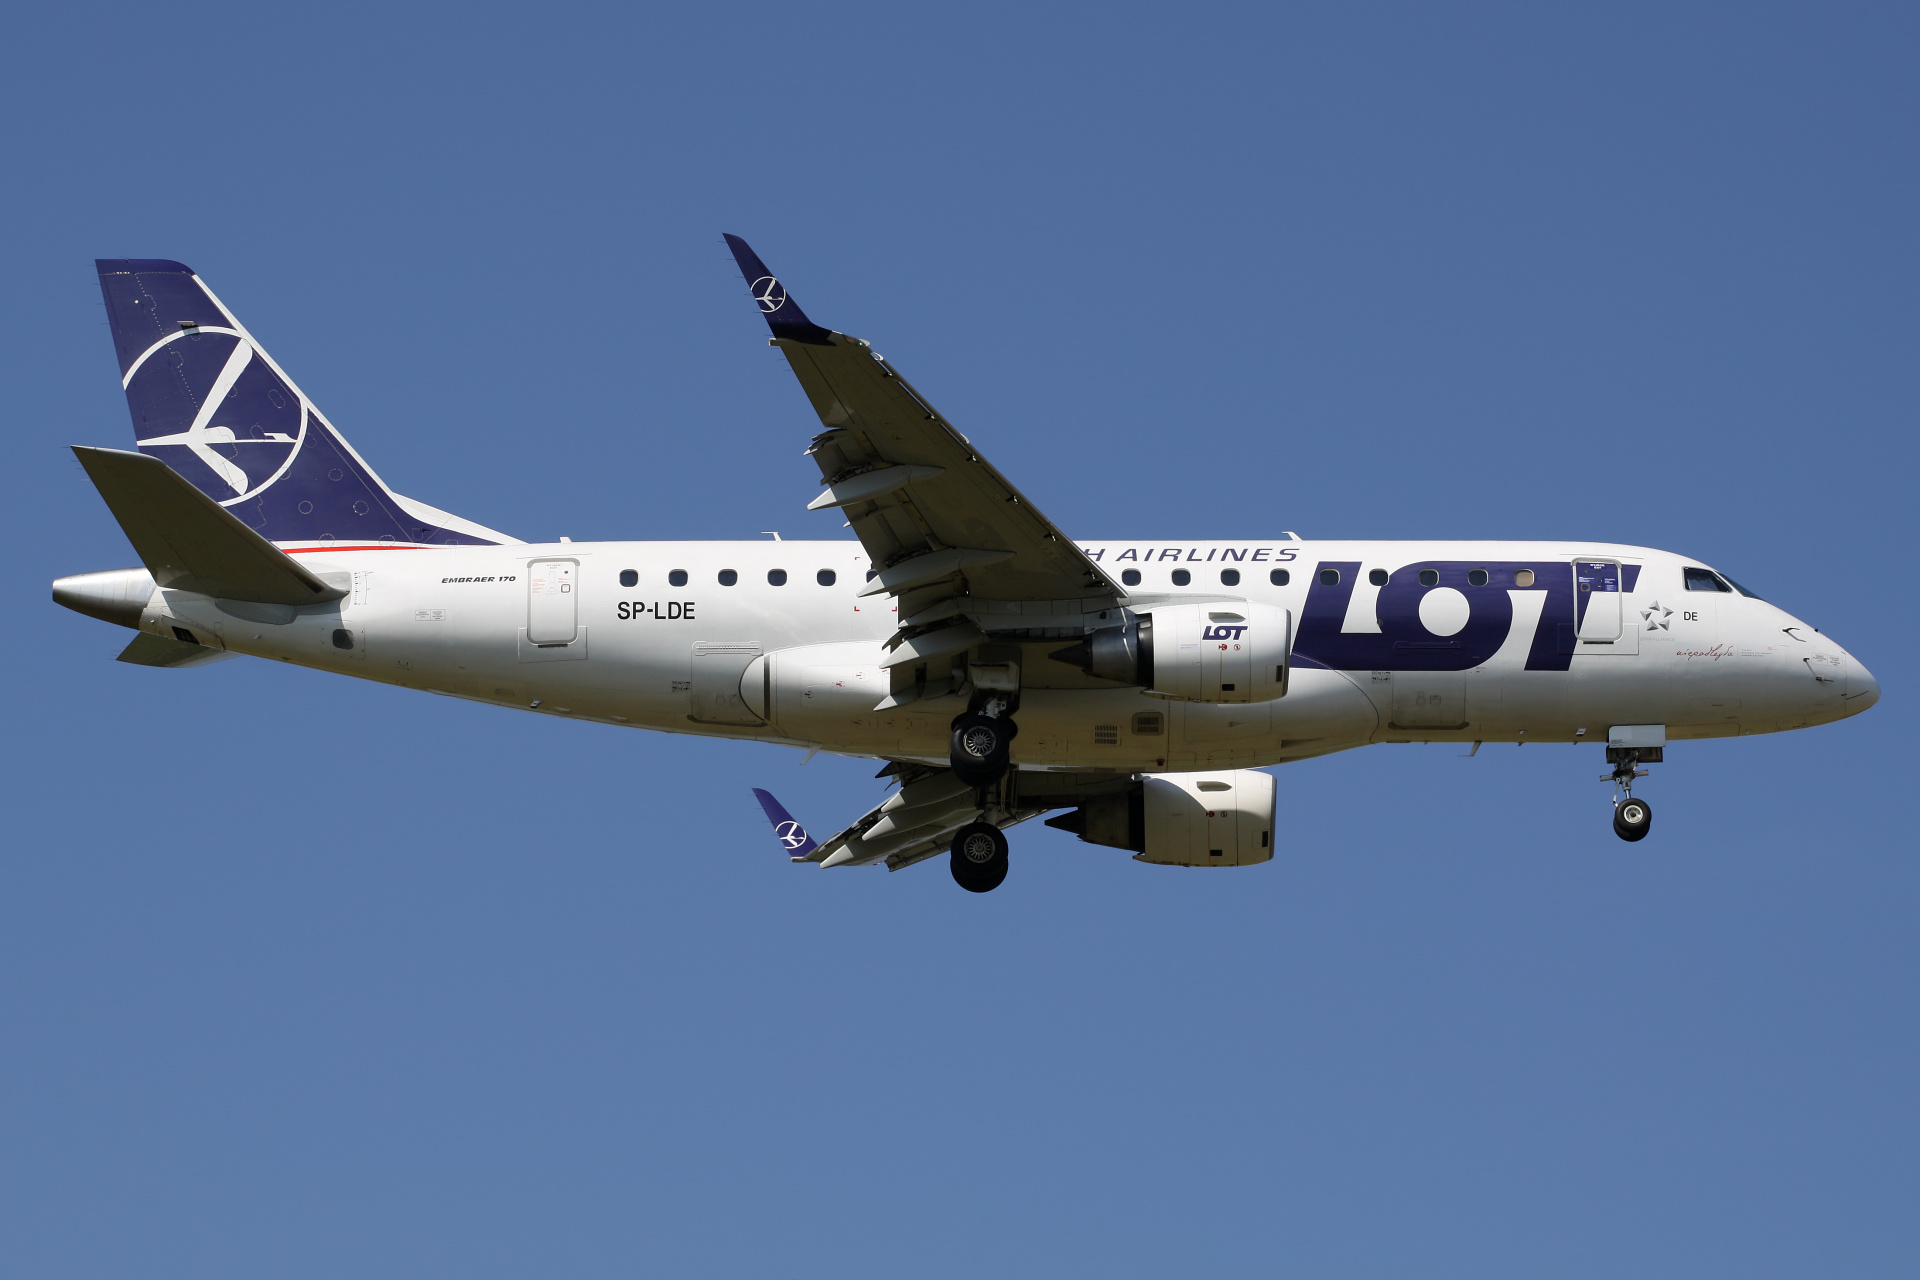 SP-LDE (Niepodległa sticker) (Aircraft » EPWA Spotting » Embraer E170 » LOT Polish Airlines)